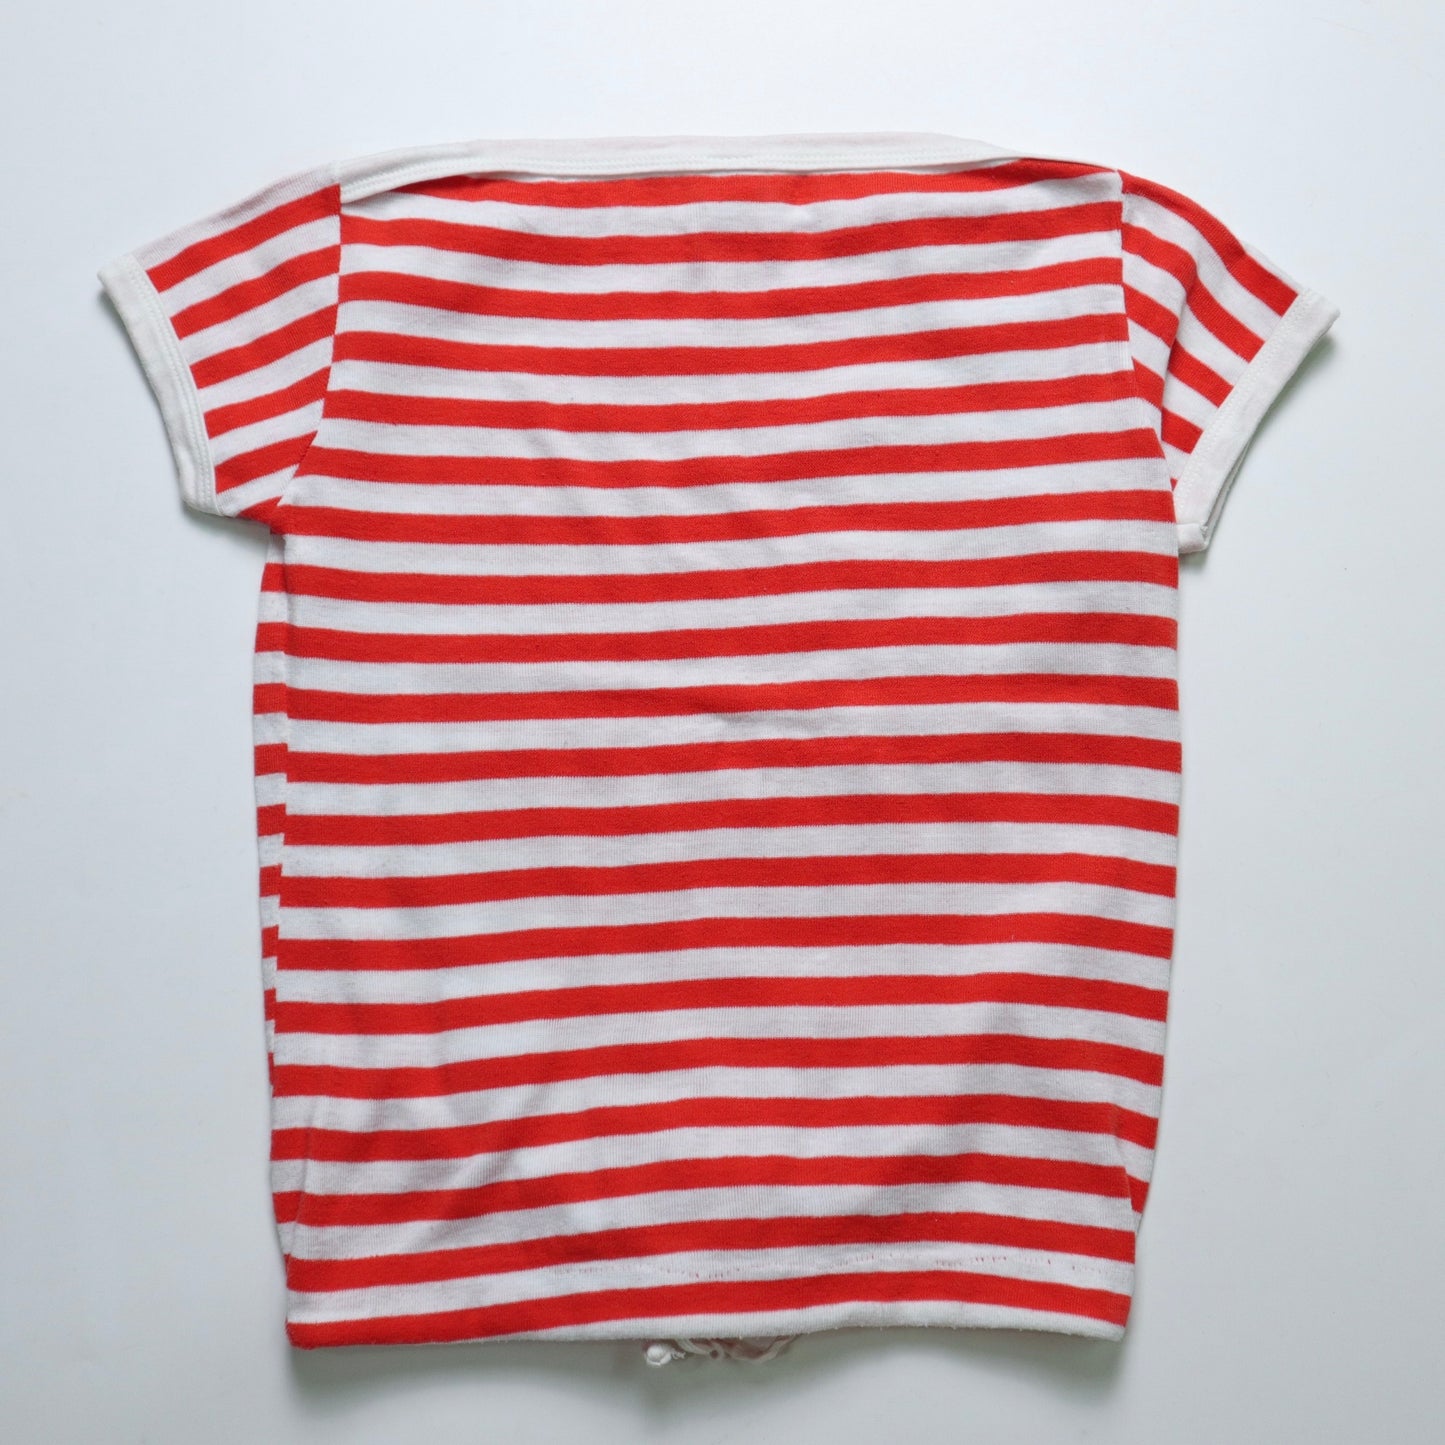 1980s boat collar striped top American striped tee